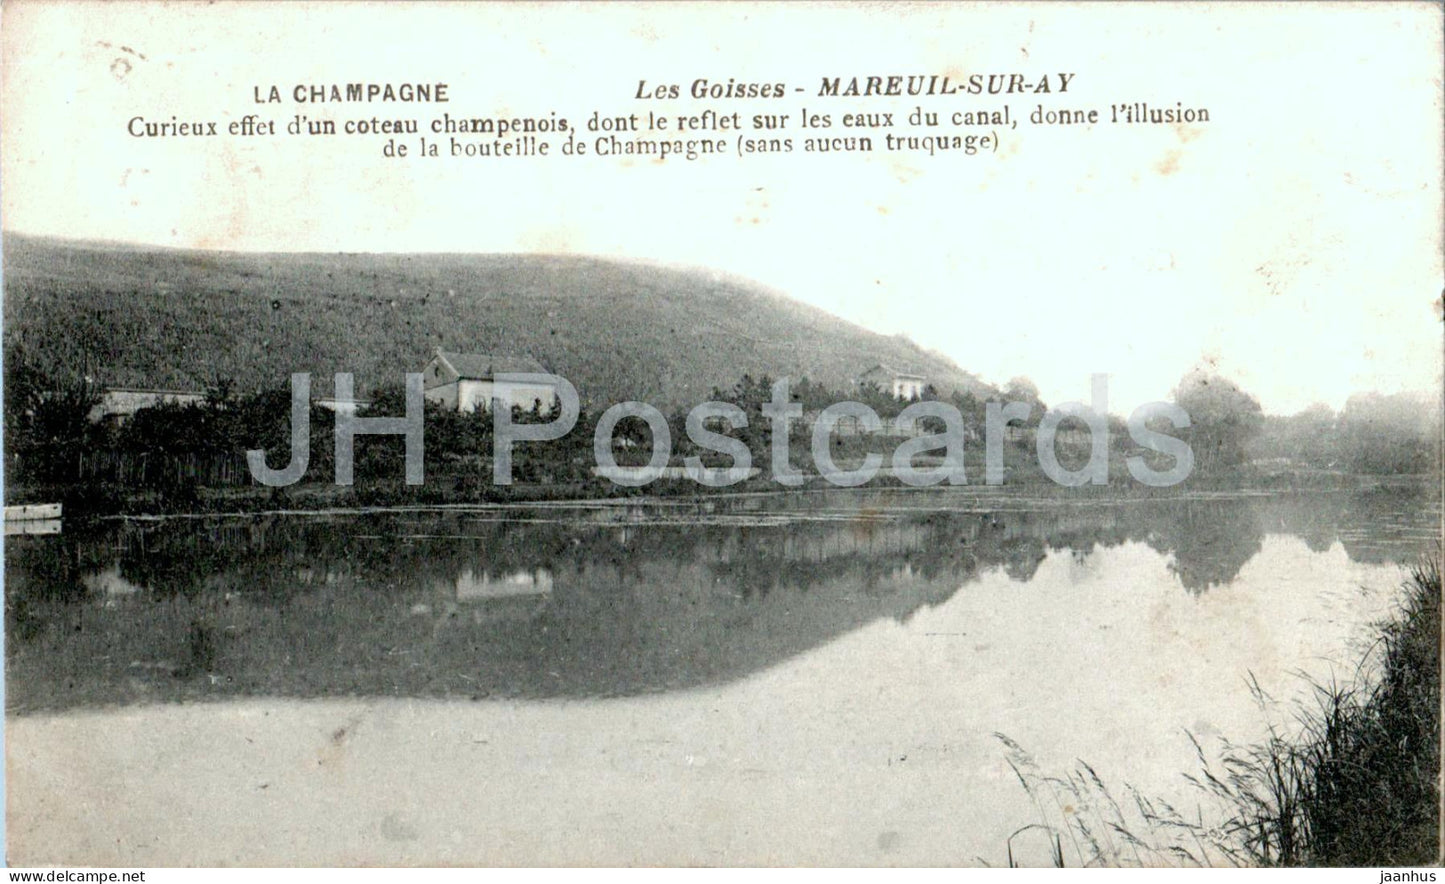 Mareuil sur Ay - Les Goisses - La Champagne - old postcard - 1920 - France - used - JH Postcards